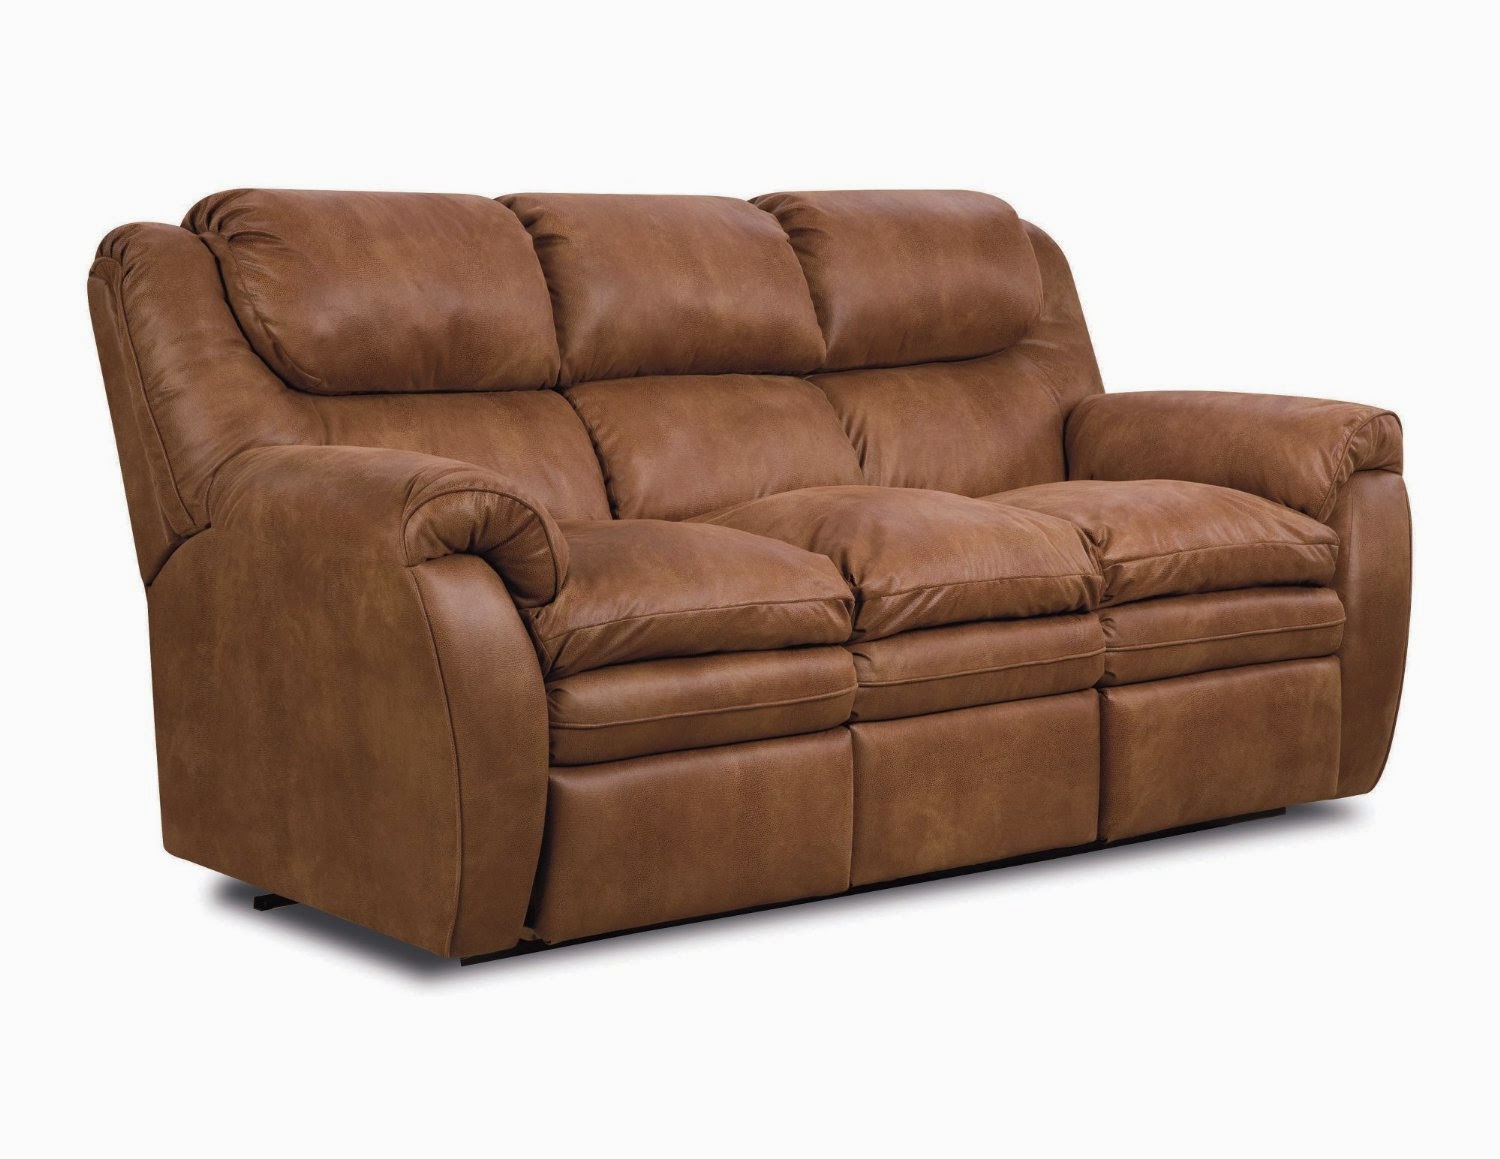 roudebush double leather reclining sofa